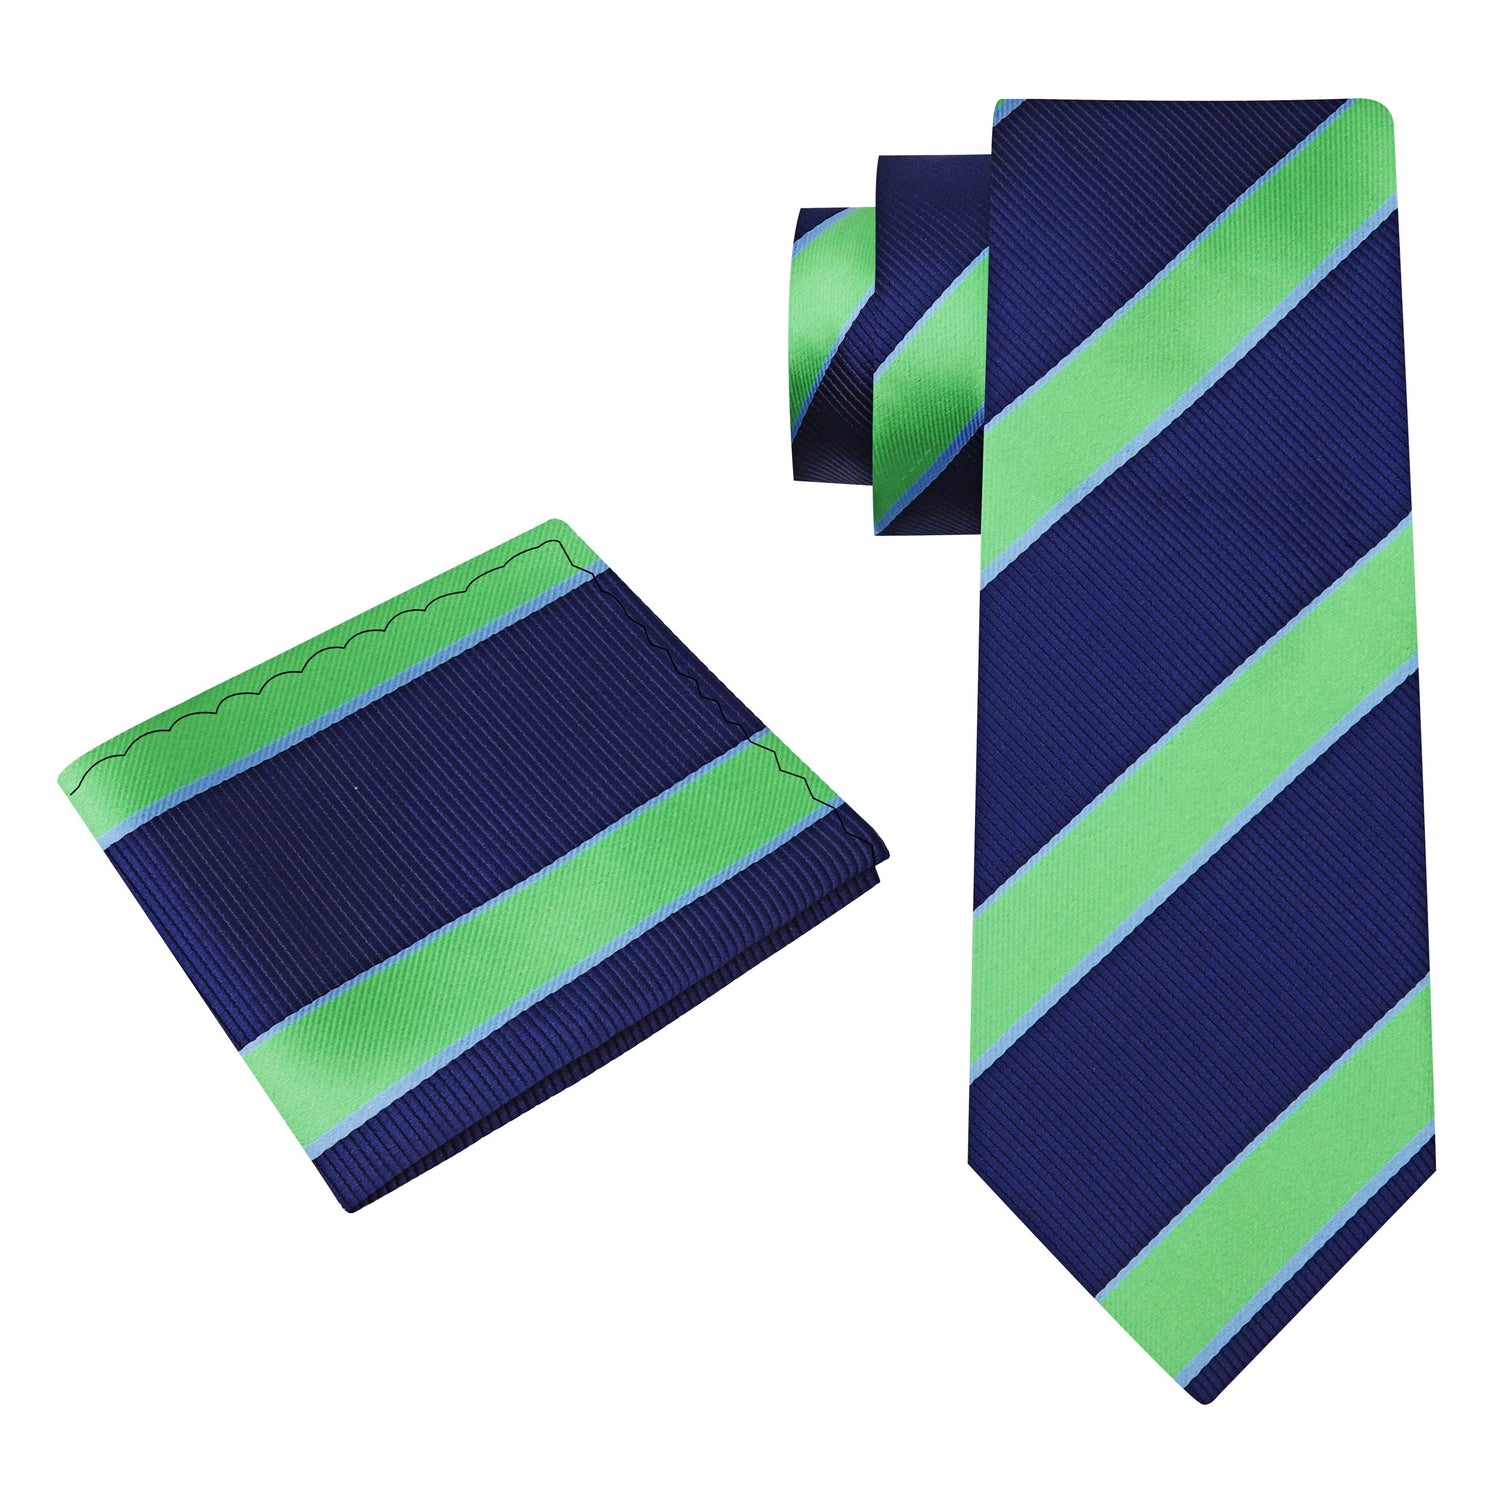 Main View: A Dark Blue, Bright Green Stripe Pattern Silk Necktie, With Matching Pocket Square